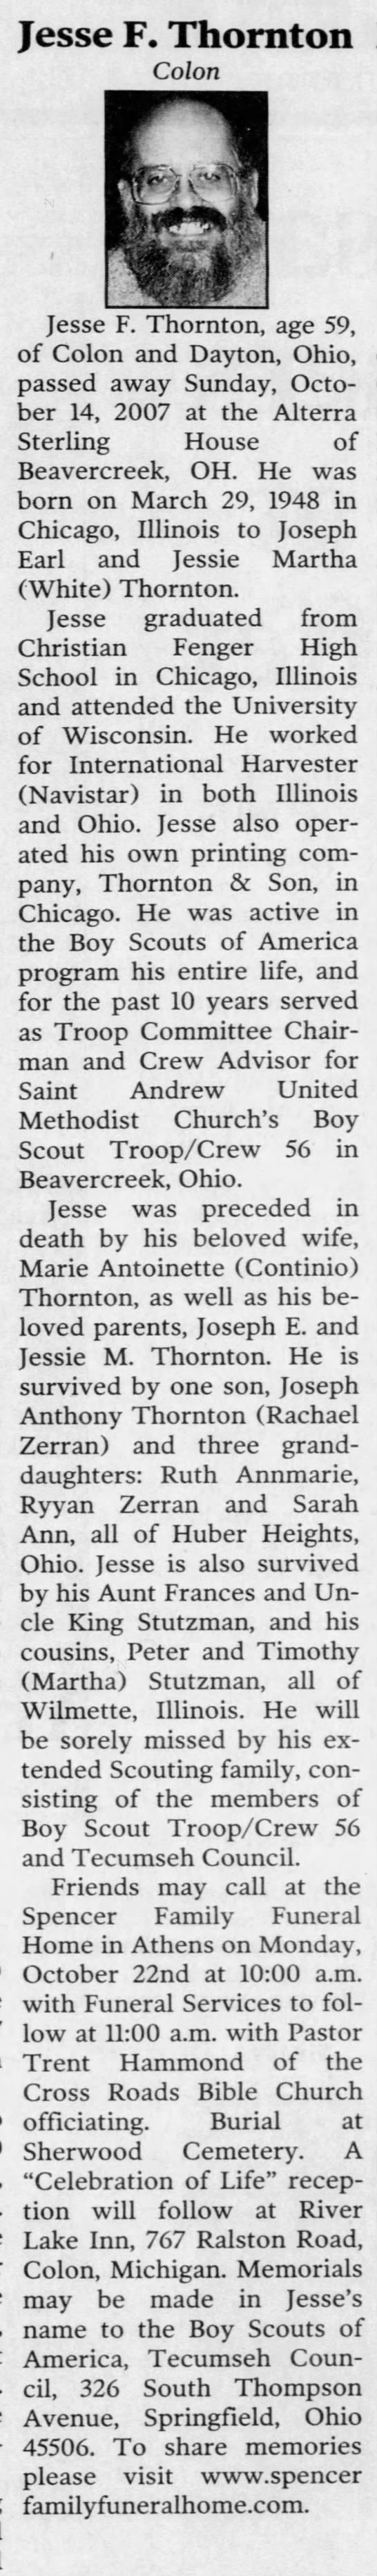 Obituary: Jesse F. Thornton, 1948-2007 (Aged 59) - 